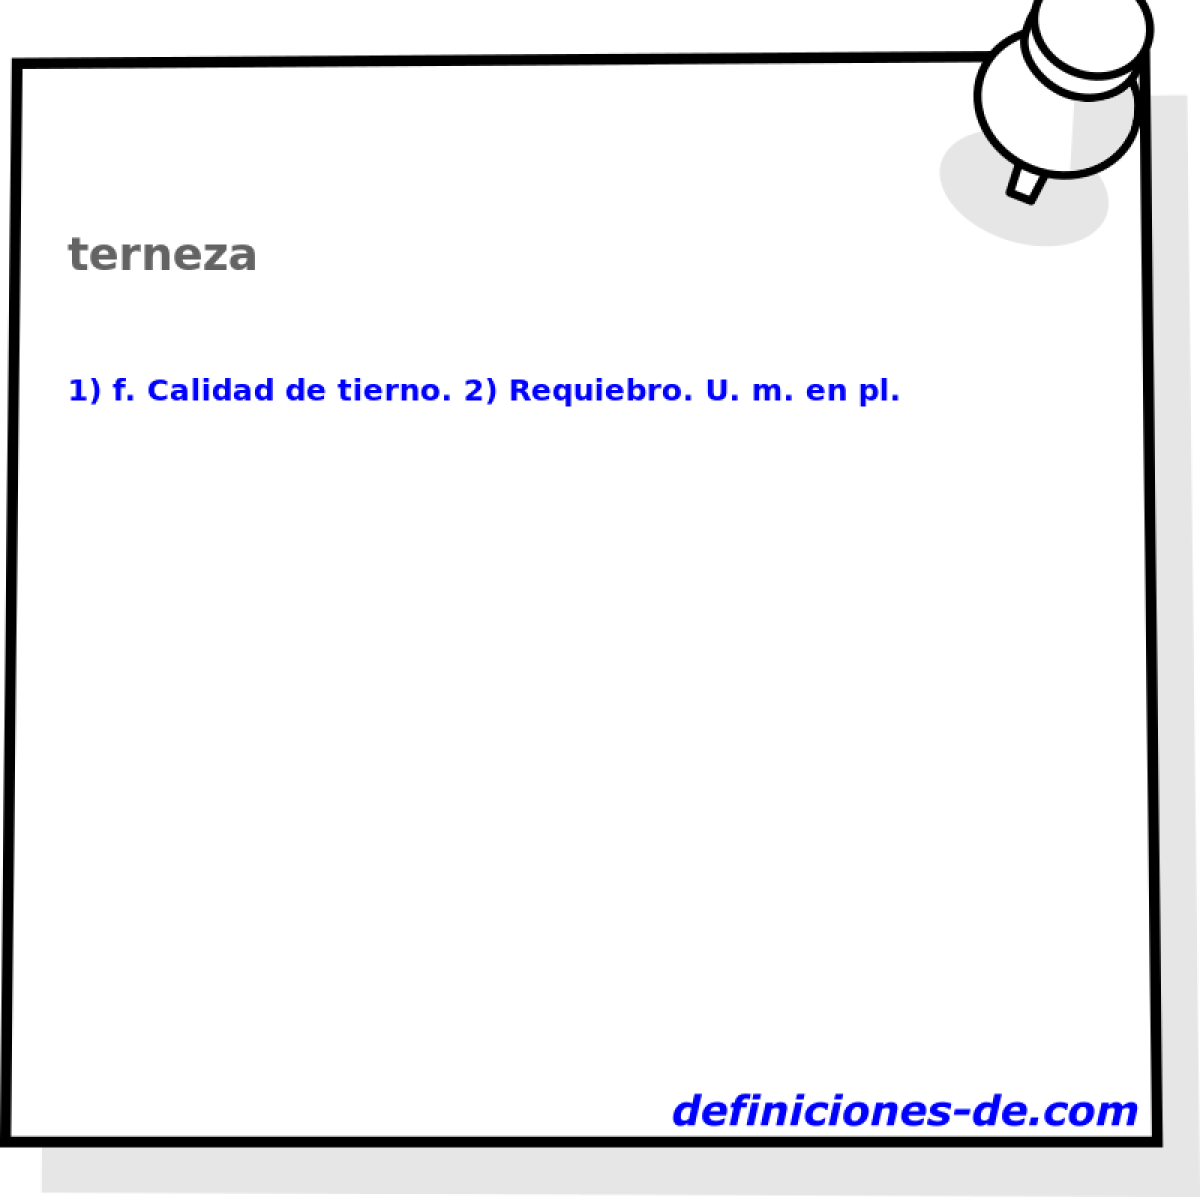 terneza 